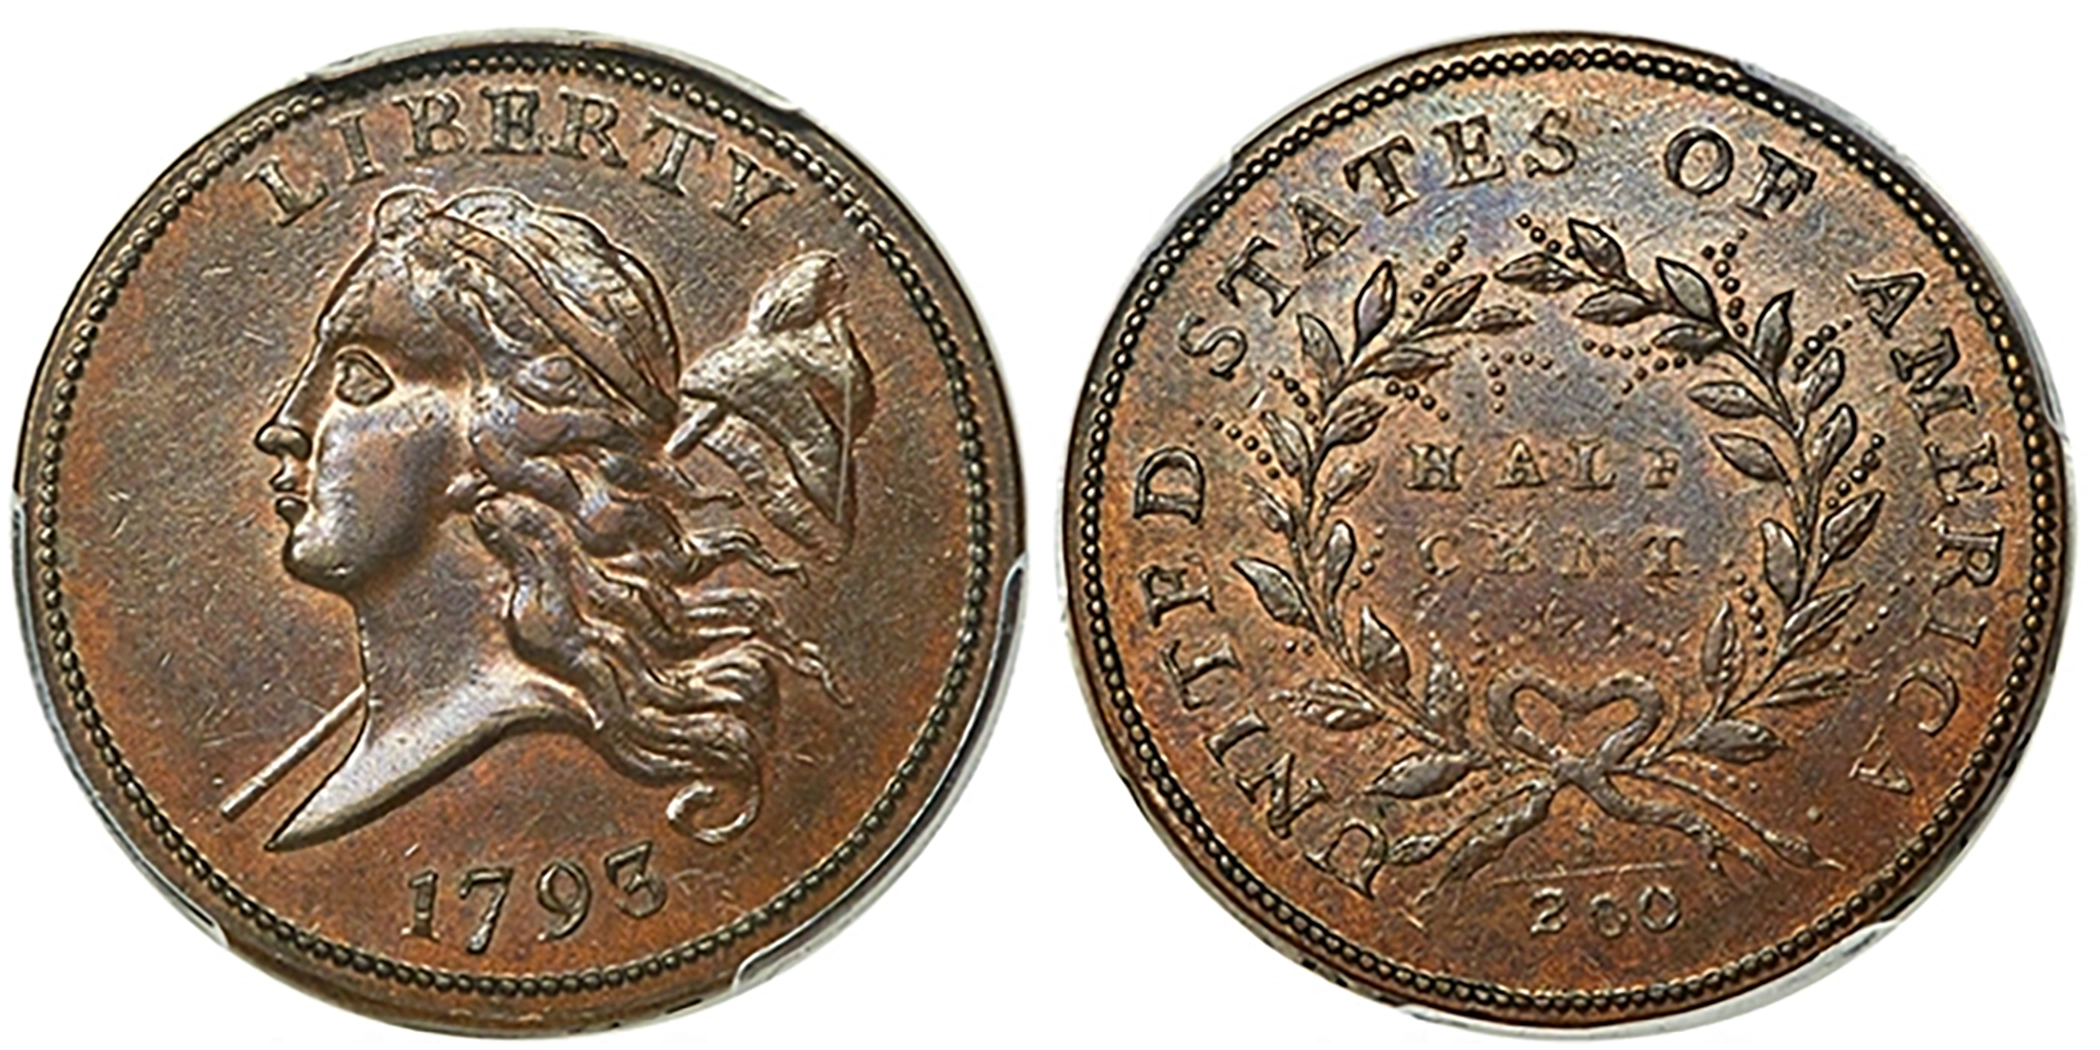 1793 Liberty Cap Half Cent, C-1. Image: Heritage Auctions (visit www.ha.com).